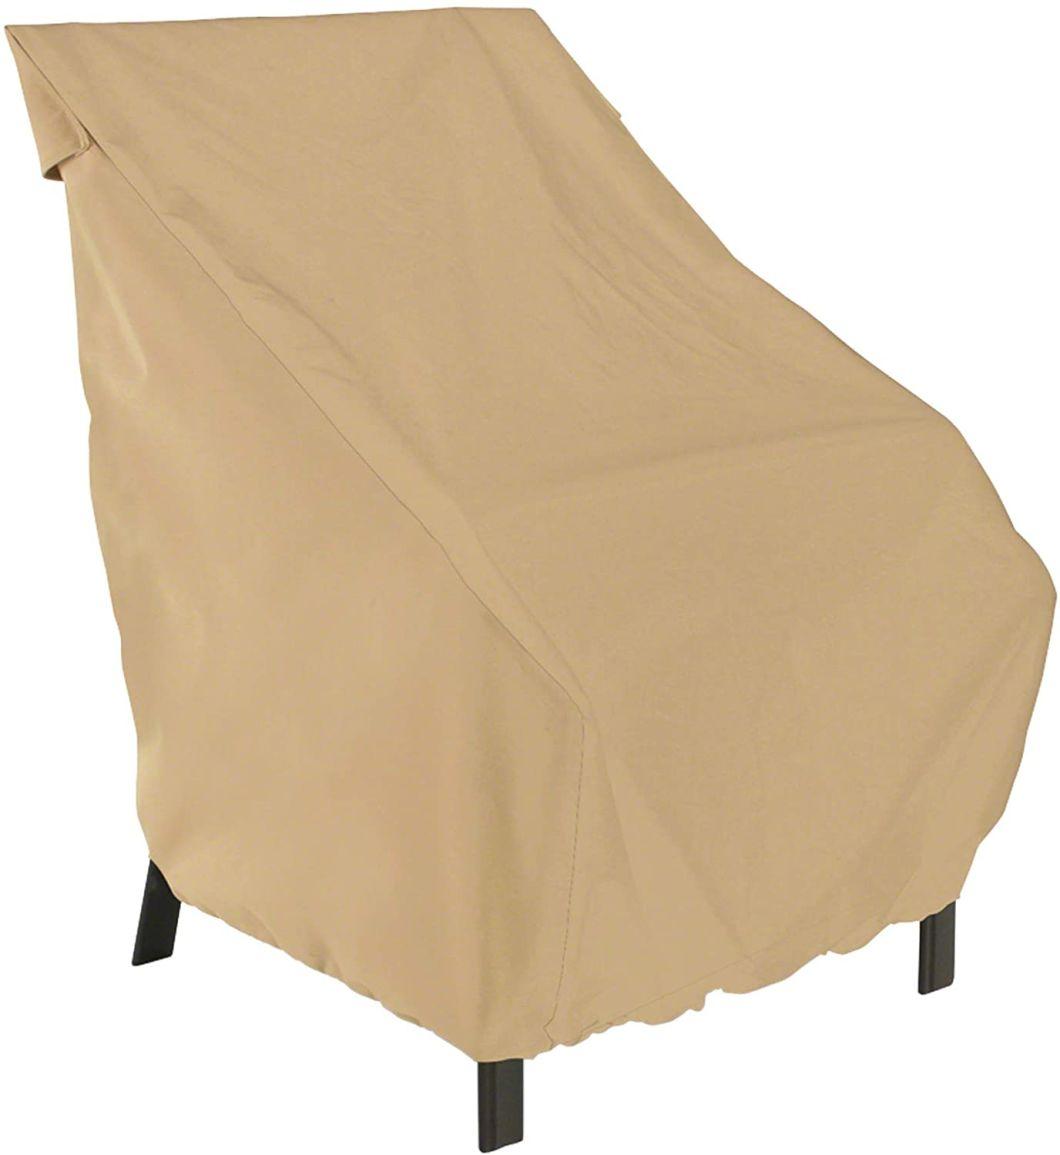 Waterproof Oxford Fabric Garden Outdoor Chair Cover